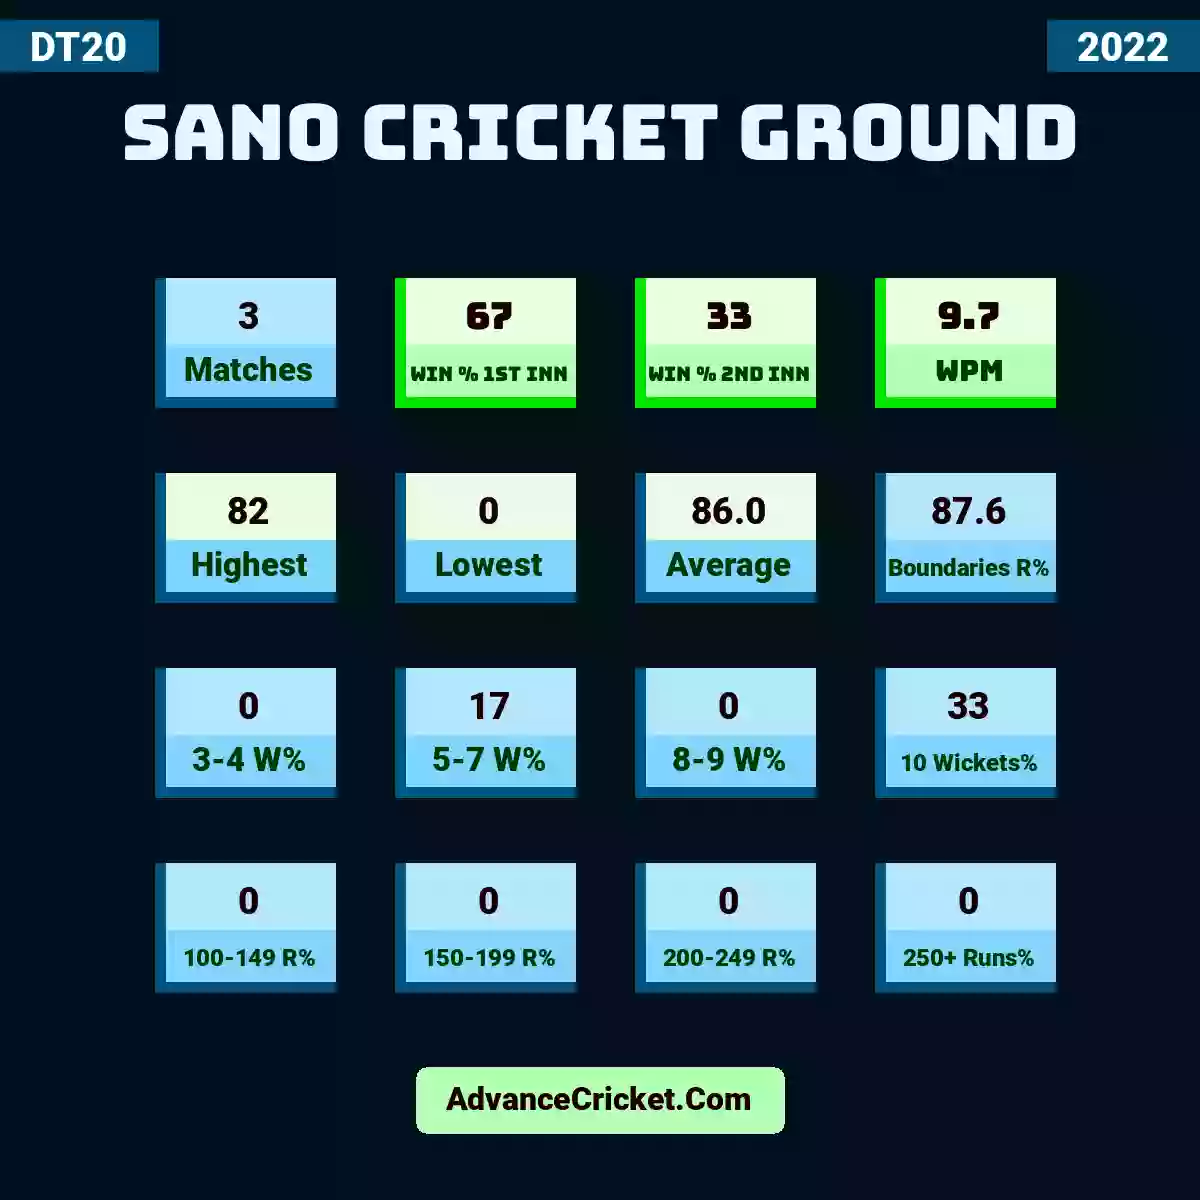 Image showing Sano Cricket Ground with Matches: 3, Win % 1st Inn: 67, Win % 2nd Inn: 33, WPM: 9.7, Highest: 82, Lowest: 0, Average: 86.0, Boundaries R%: 87.6, 3-4 W%: 0, 5-7 W%: 17, 8-9 W%: 0, 10 Wickets%: 33, 100-149 R%: 0, 150-199 R%: 0, 200-249 R%: 0, 250+ Runs%: 0.